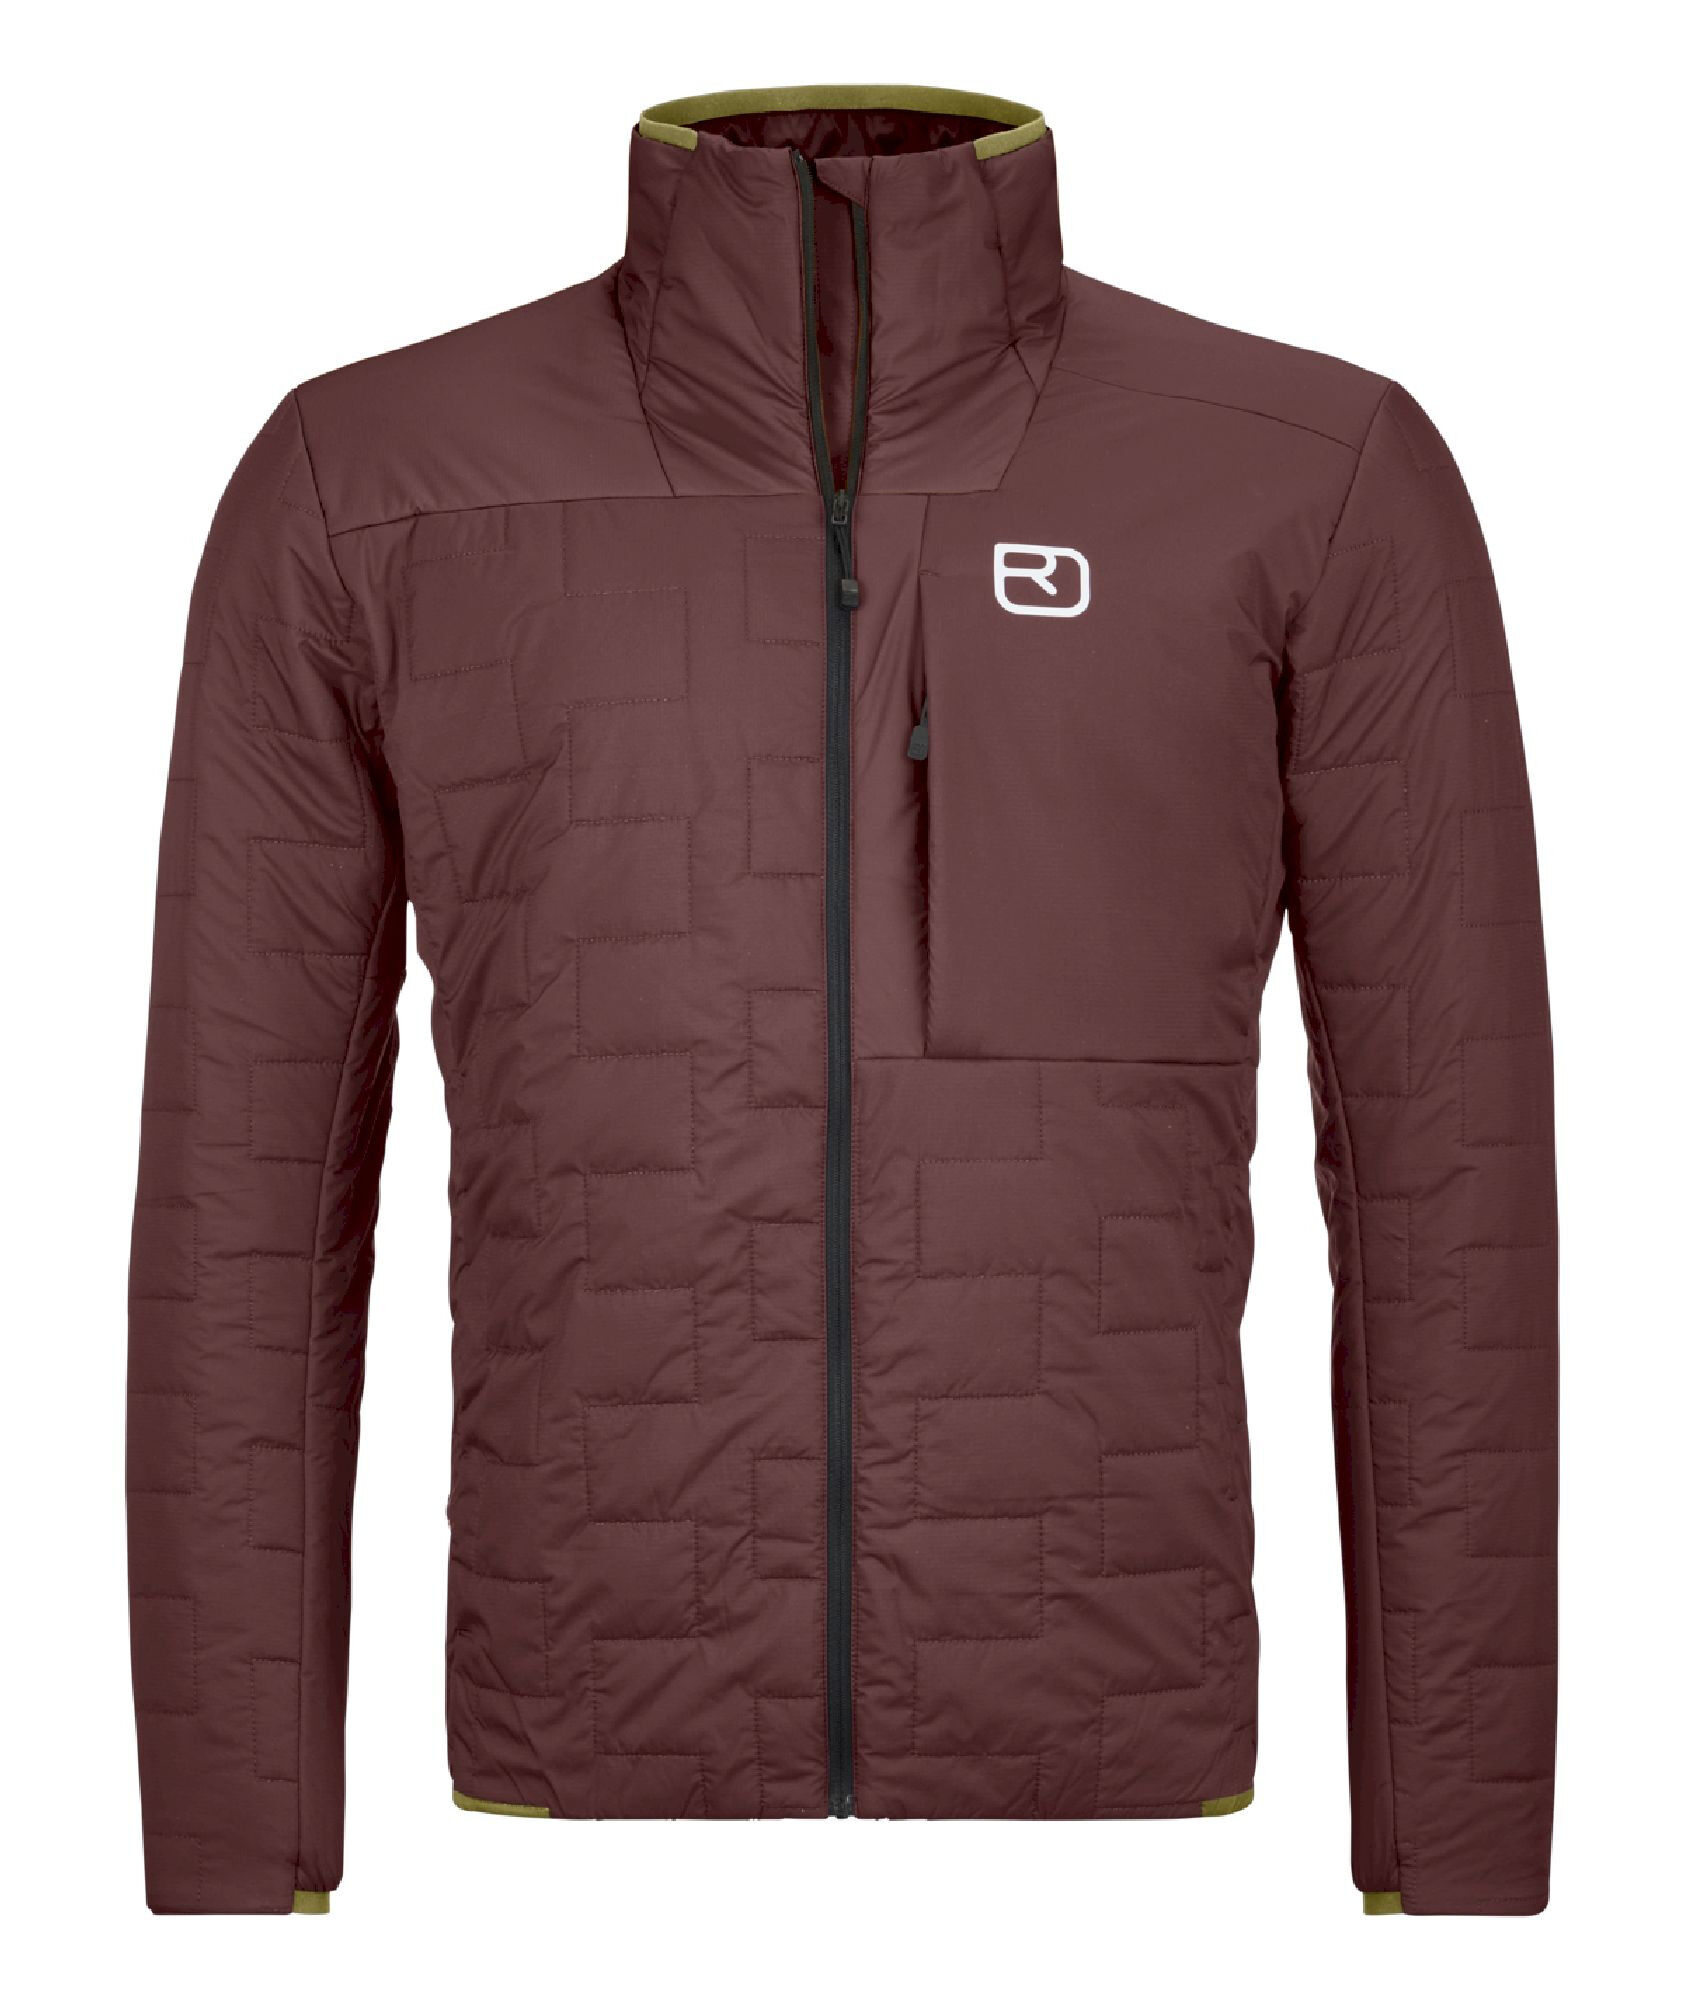 Ortovox Swisswool Piz Segnas Jacket - Merino jacket - Men's | Hardloop